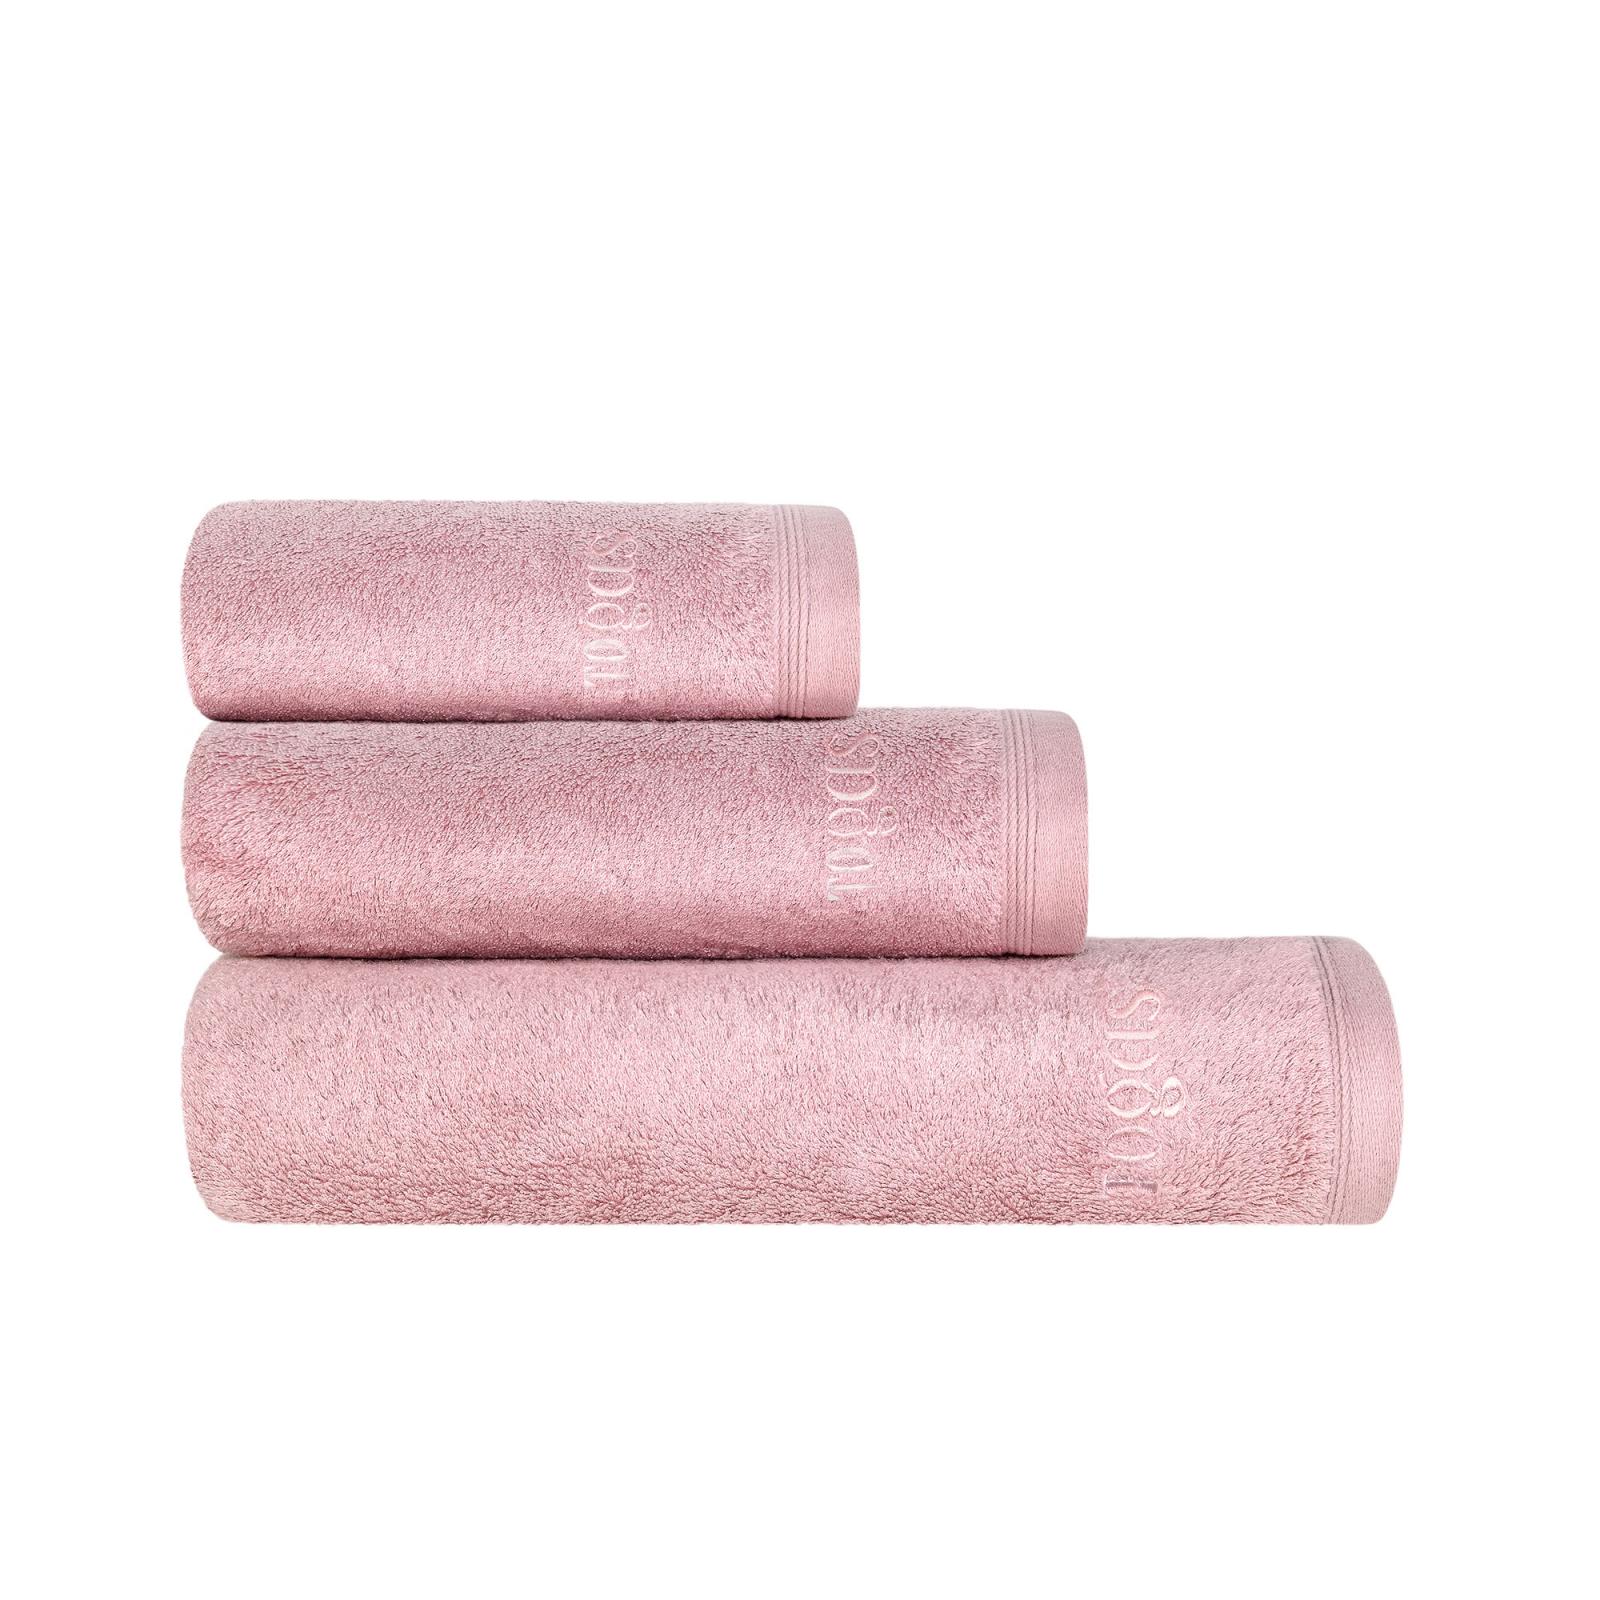 Полотенце 40х60 см Пуатье розовое Togas полотенце togas пуатье золотое 70х140 см 10 00 01 0703